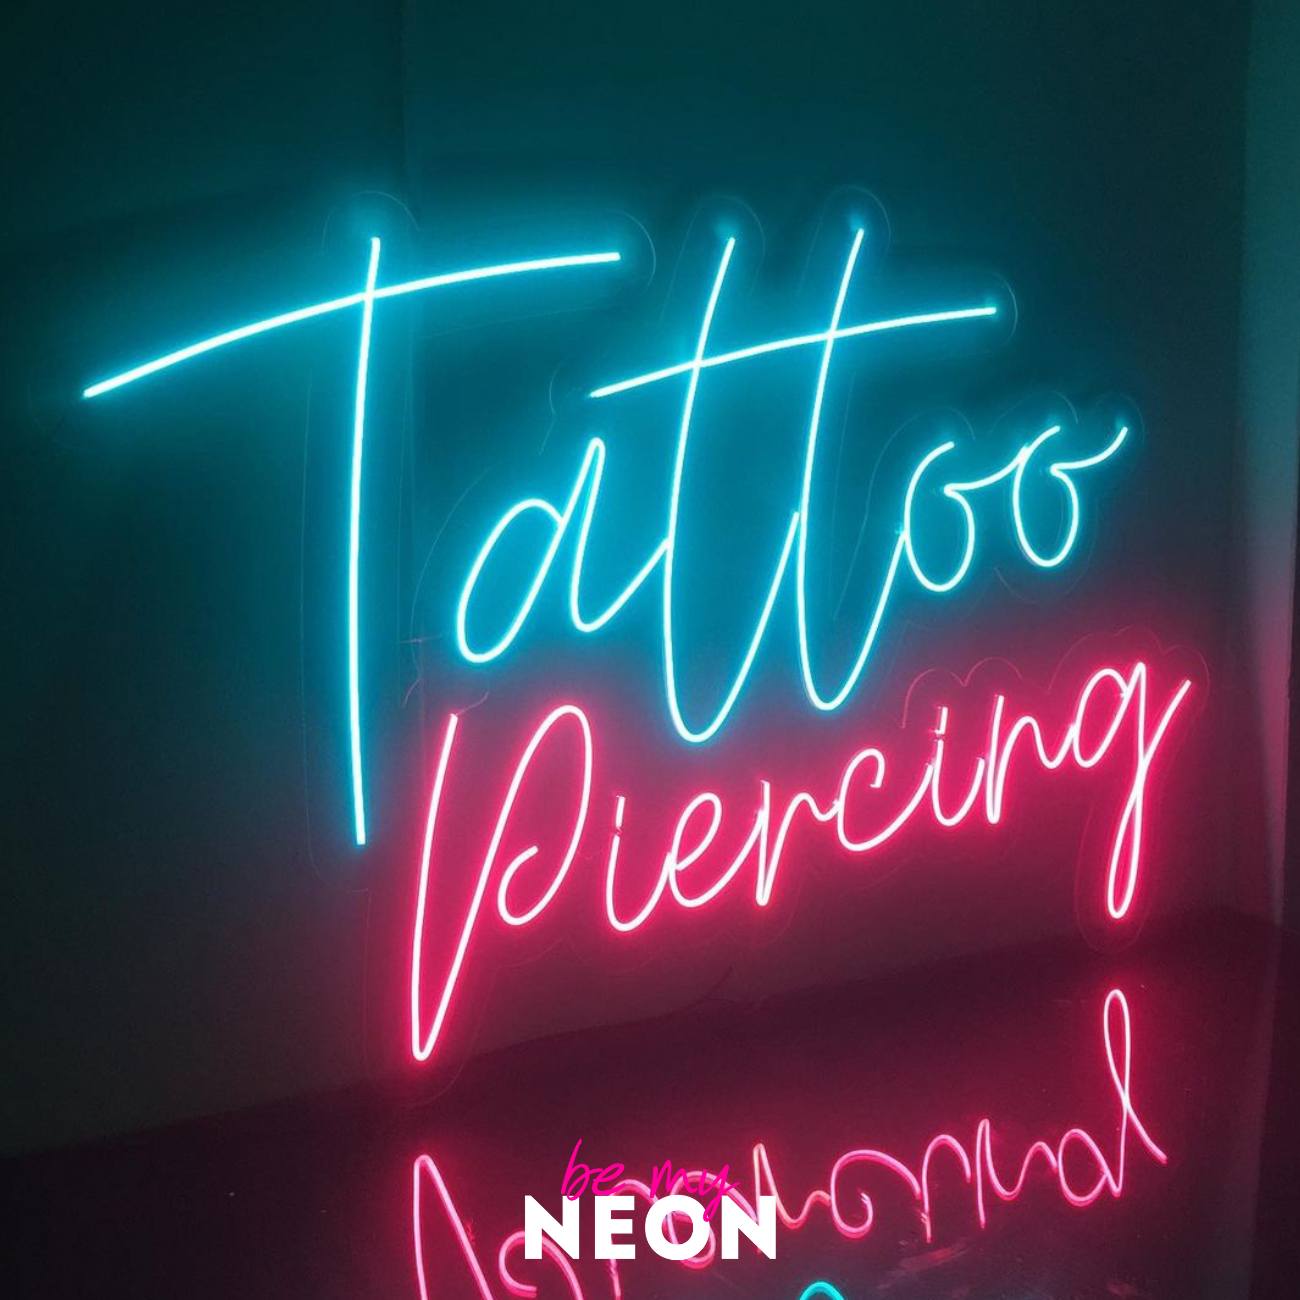 "Tattoo Piercing" LED Neonschild